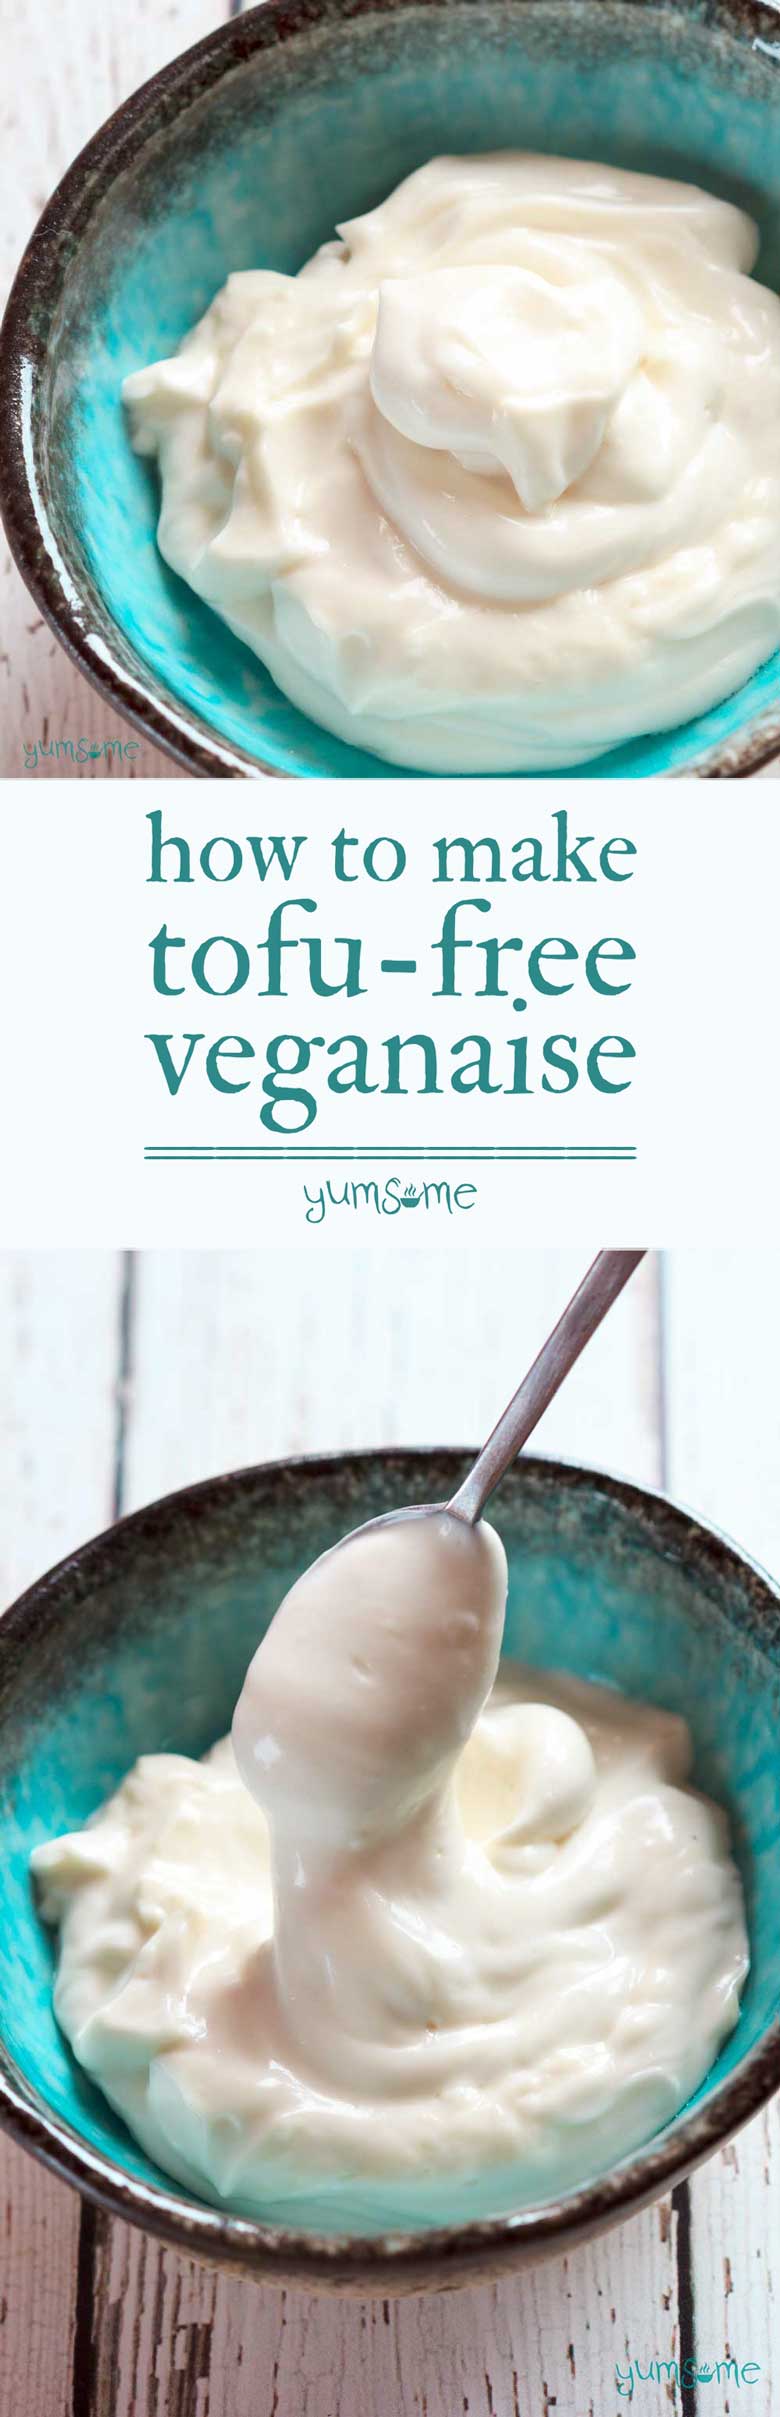 How To Make Tofu-Free Veganaise (Vegan Mayo)